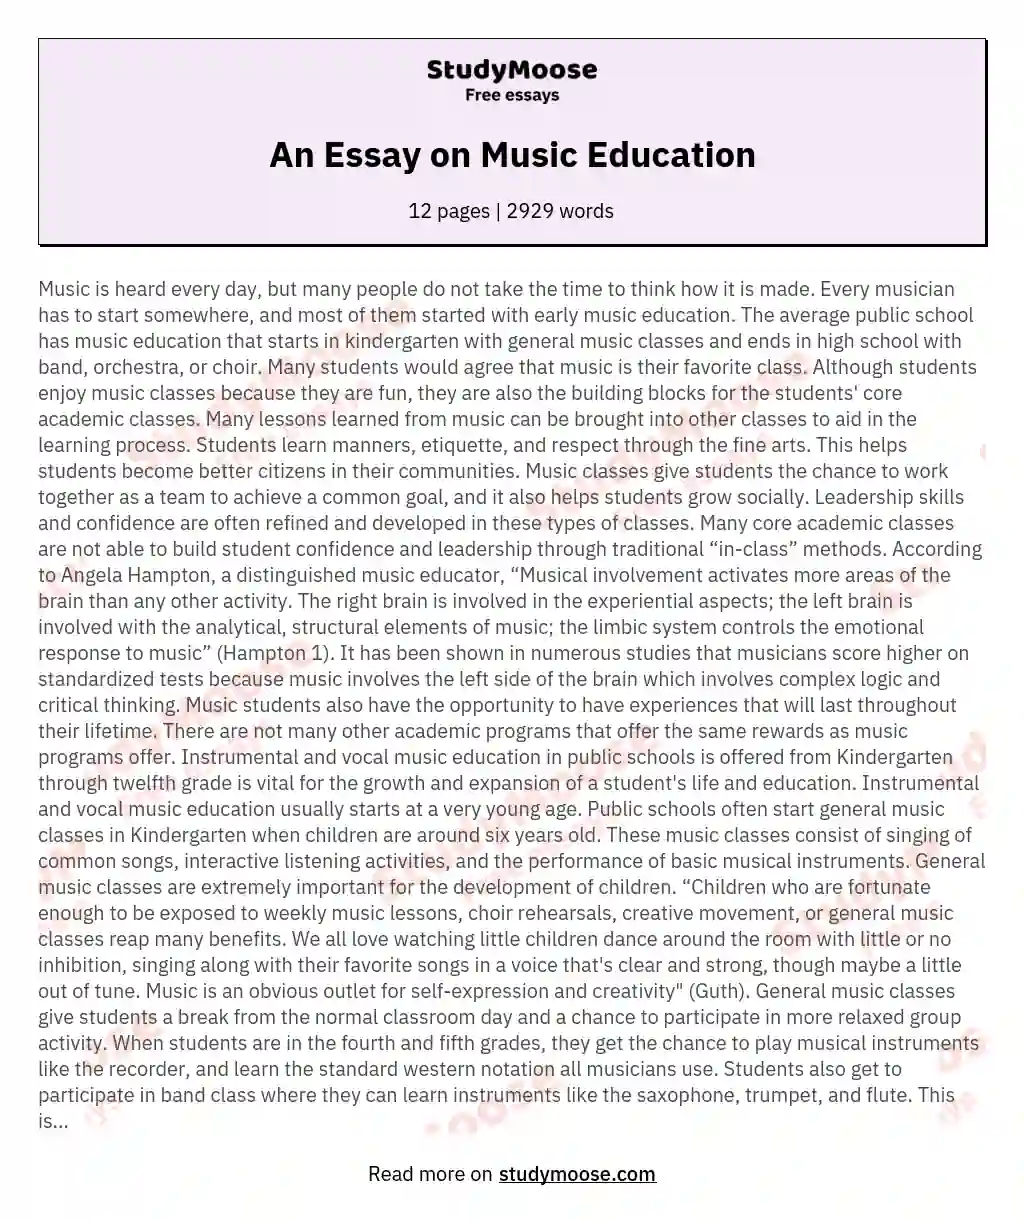 An Essay on Music Education essay